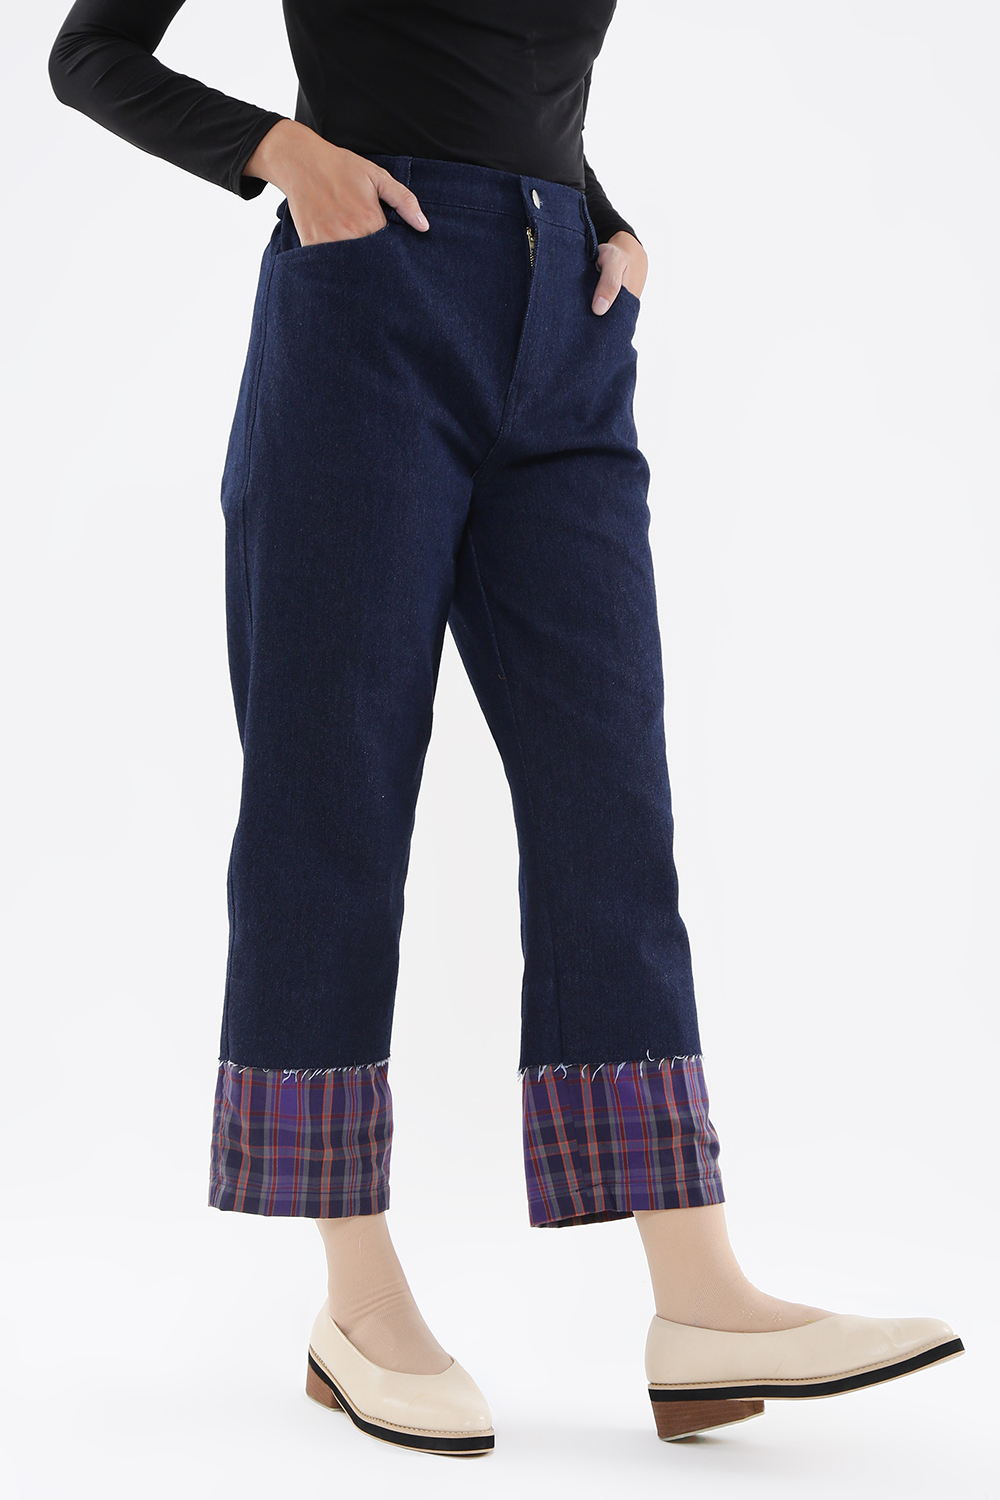 celana-jeans-motif-tartan